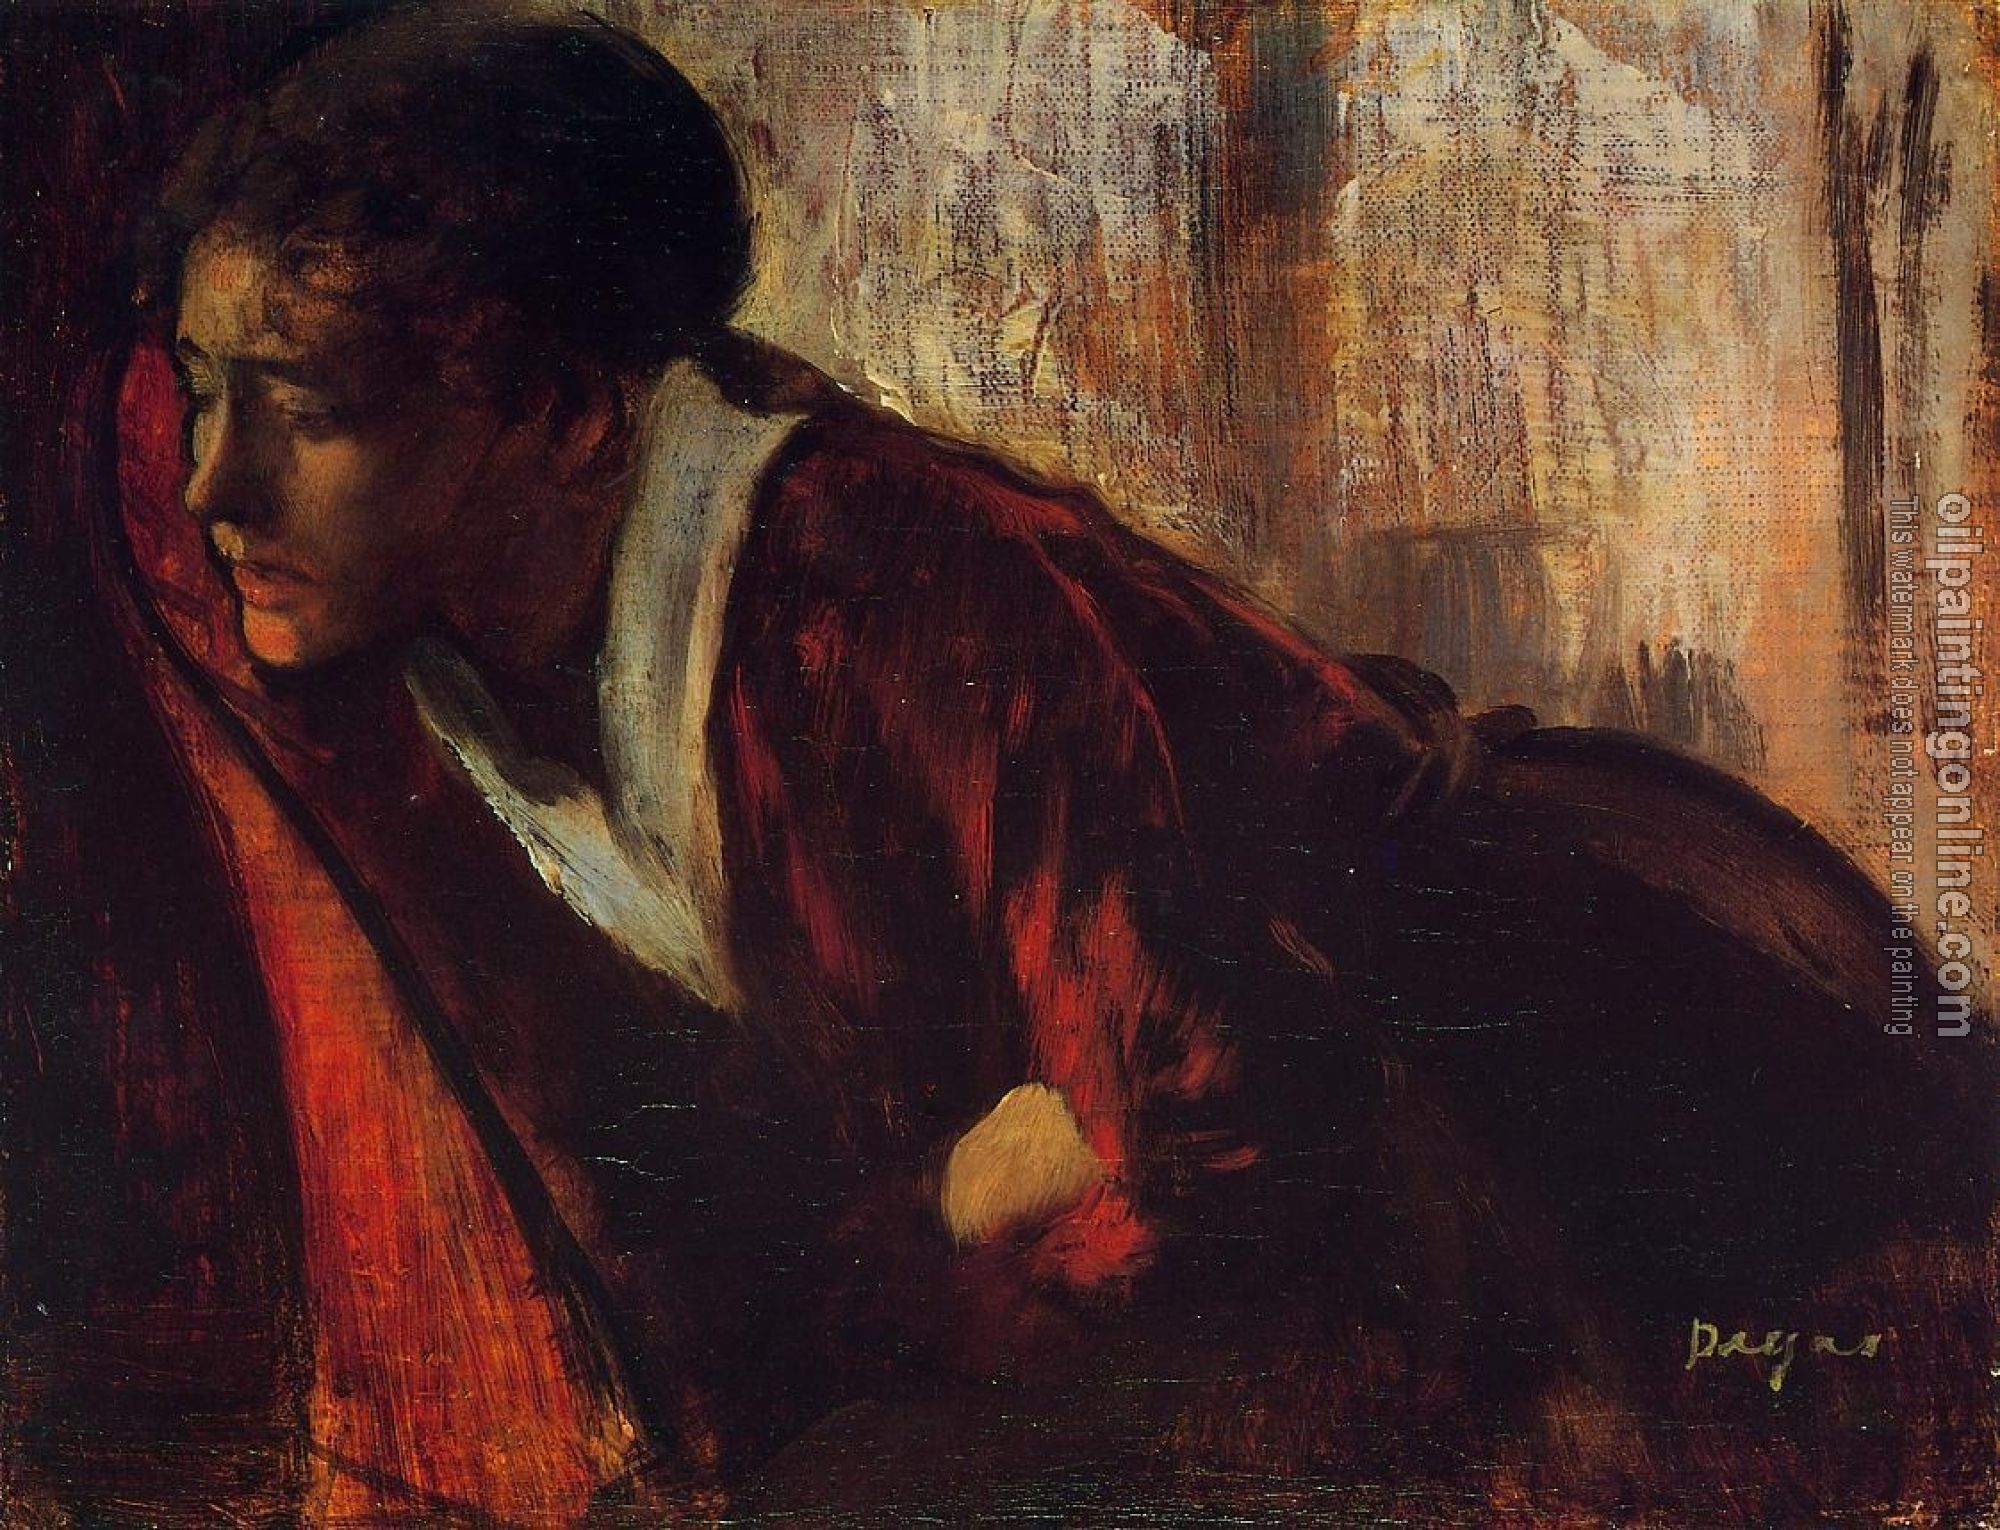 Degas, Edgar - Melancholy